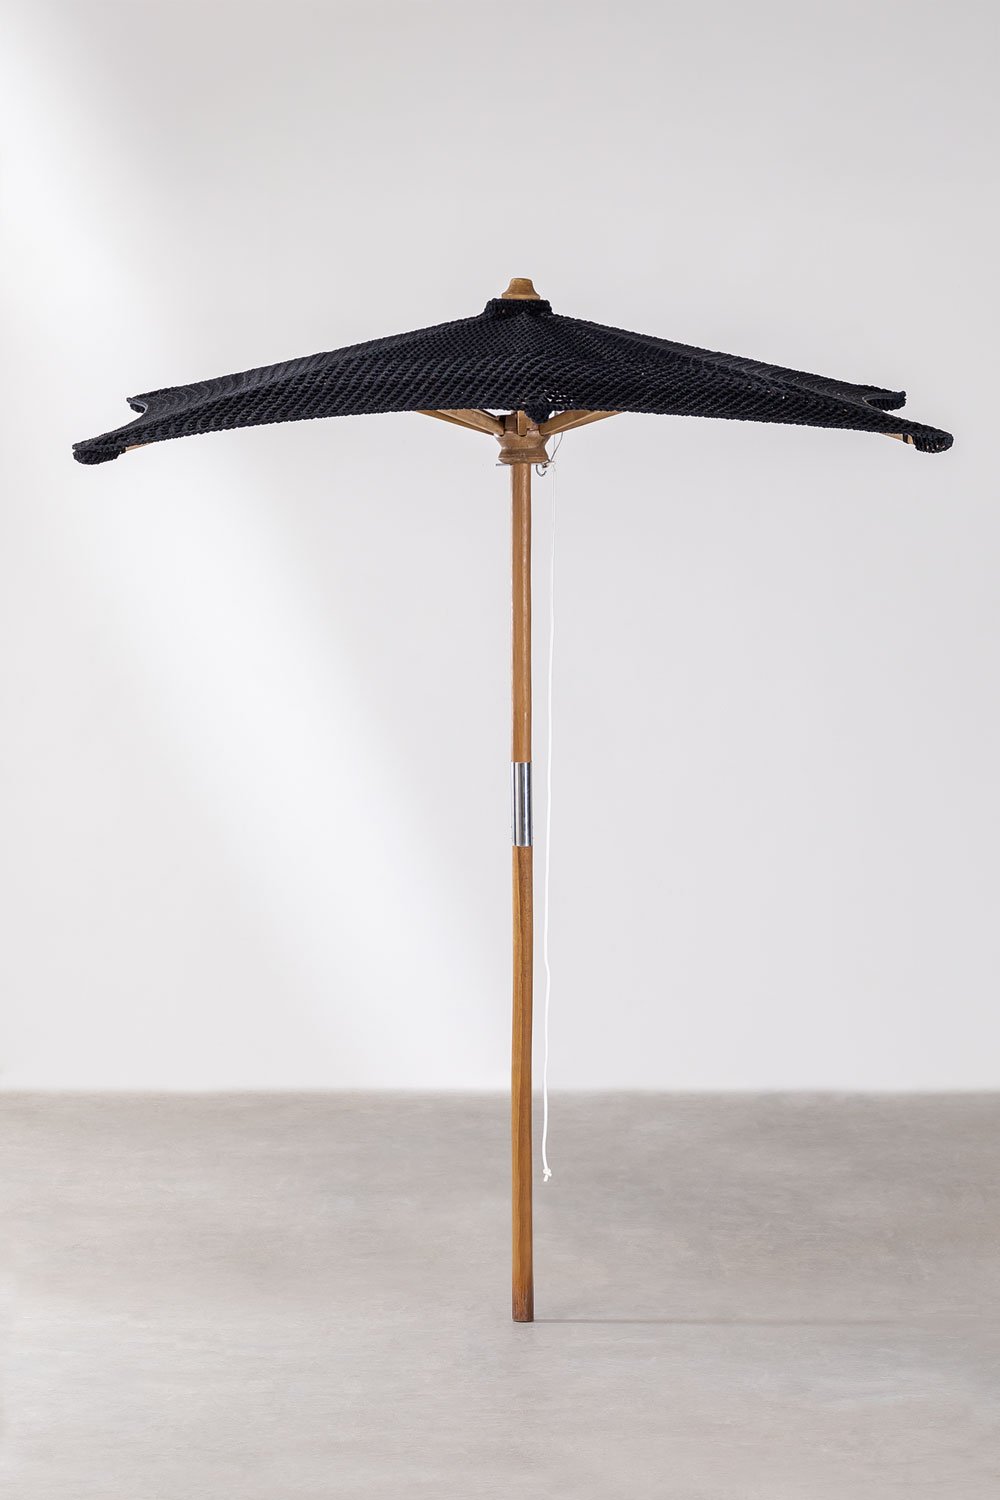 Paraplu in teakhout en macramé (183x183 cm) Poike, galerij beeld 1